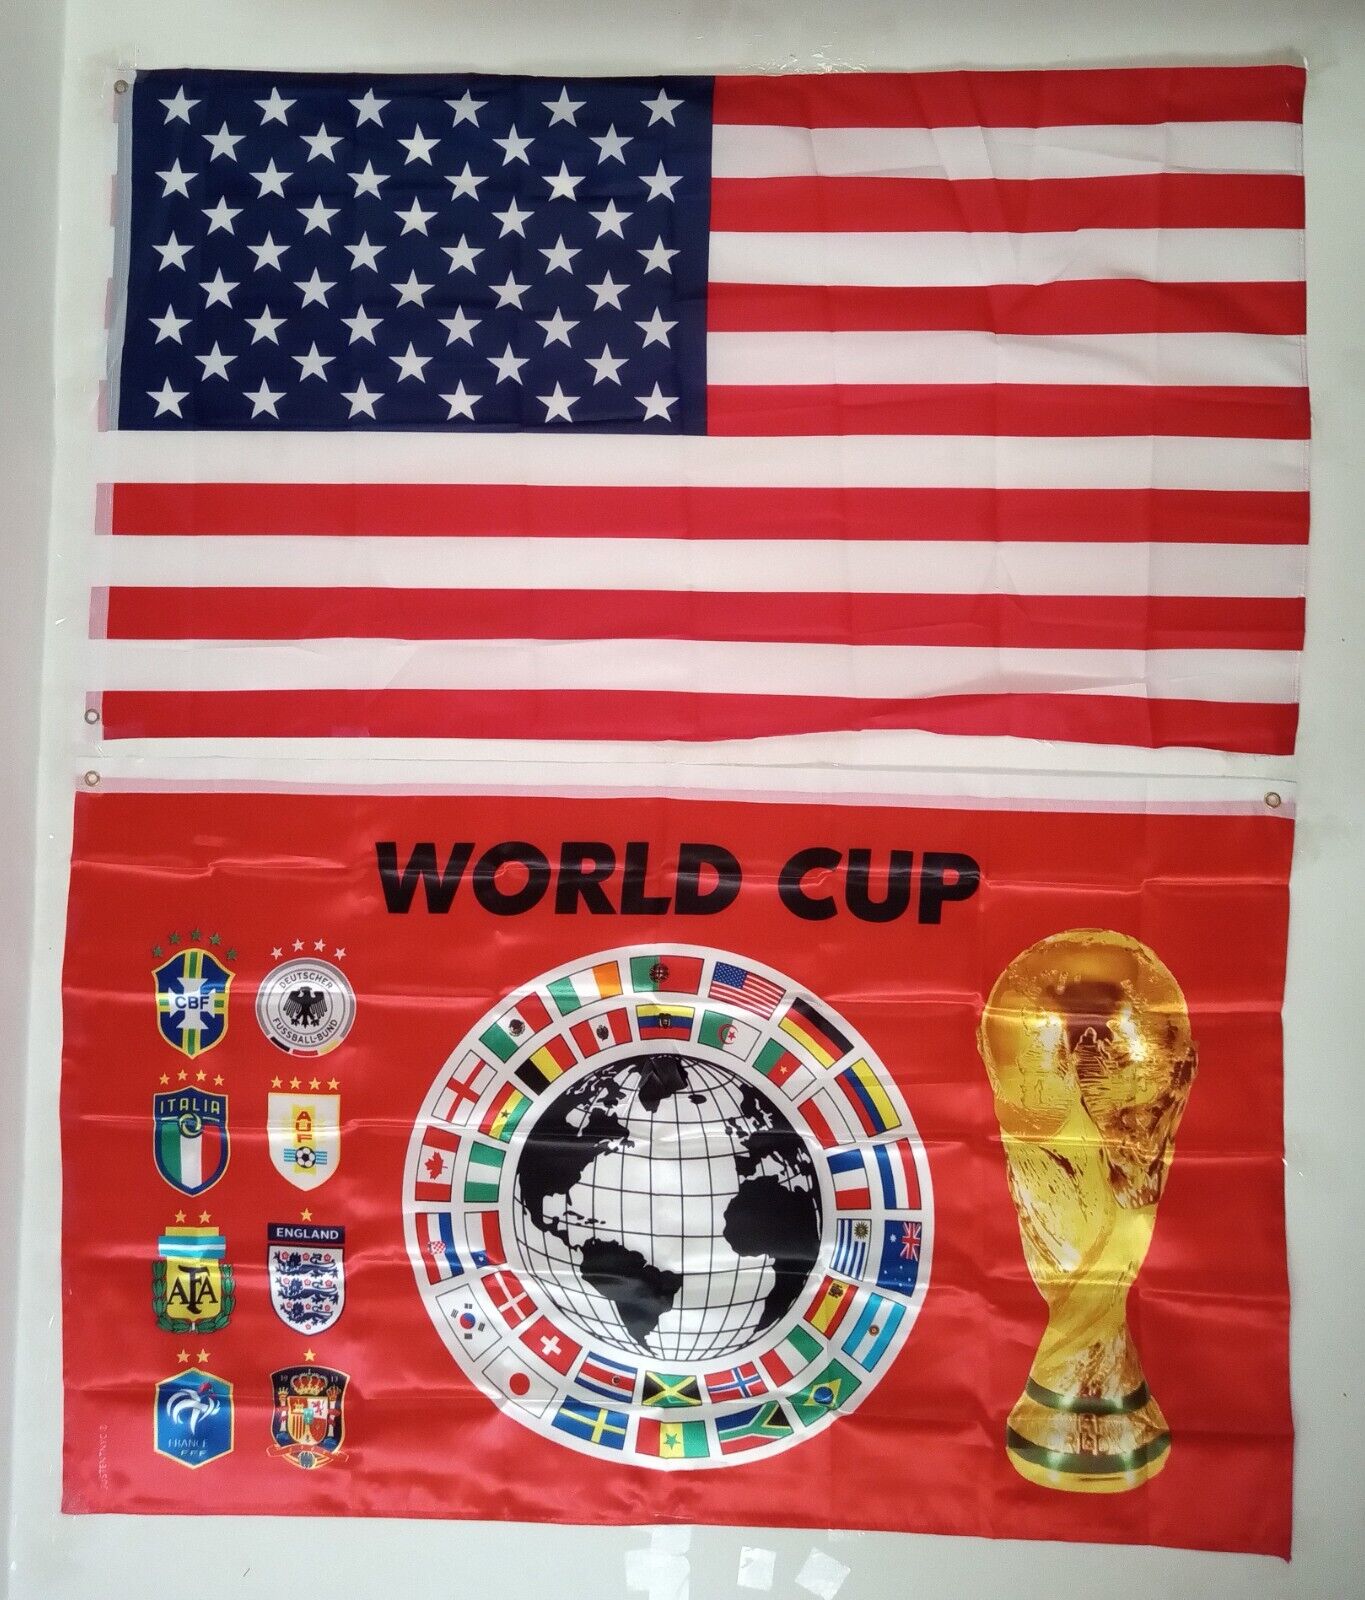 1  USA FLAG + 1 GENERIC WORLD CUP FLAG (3X5 FT) $35